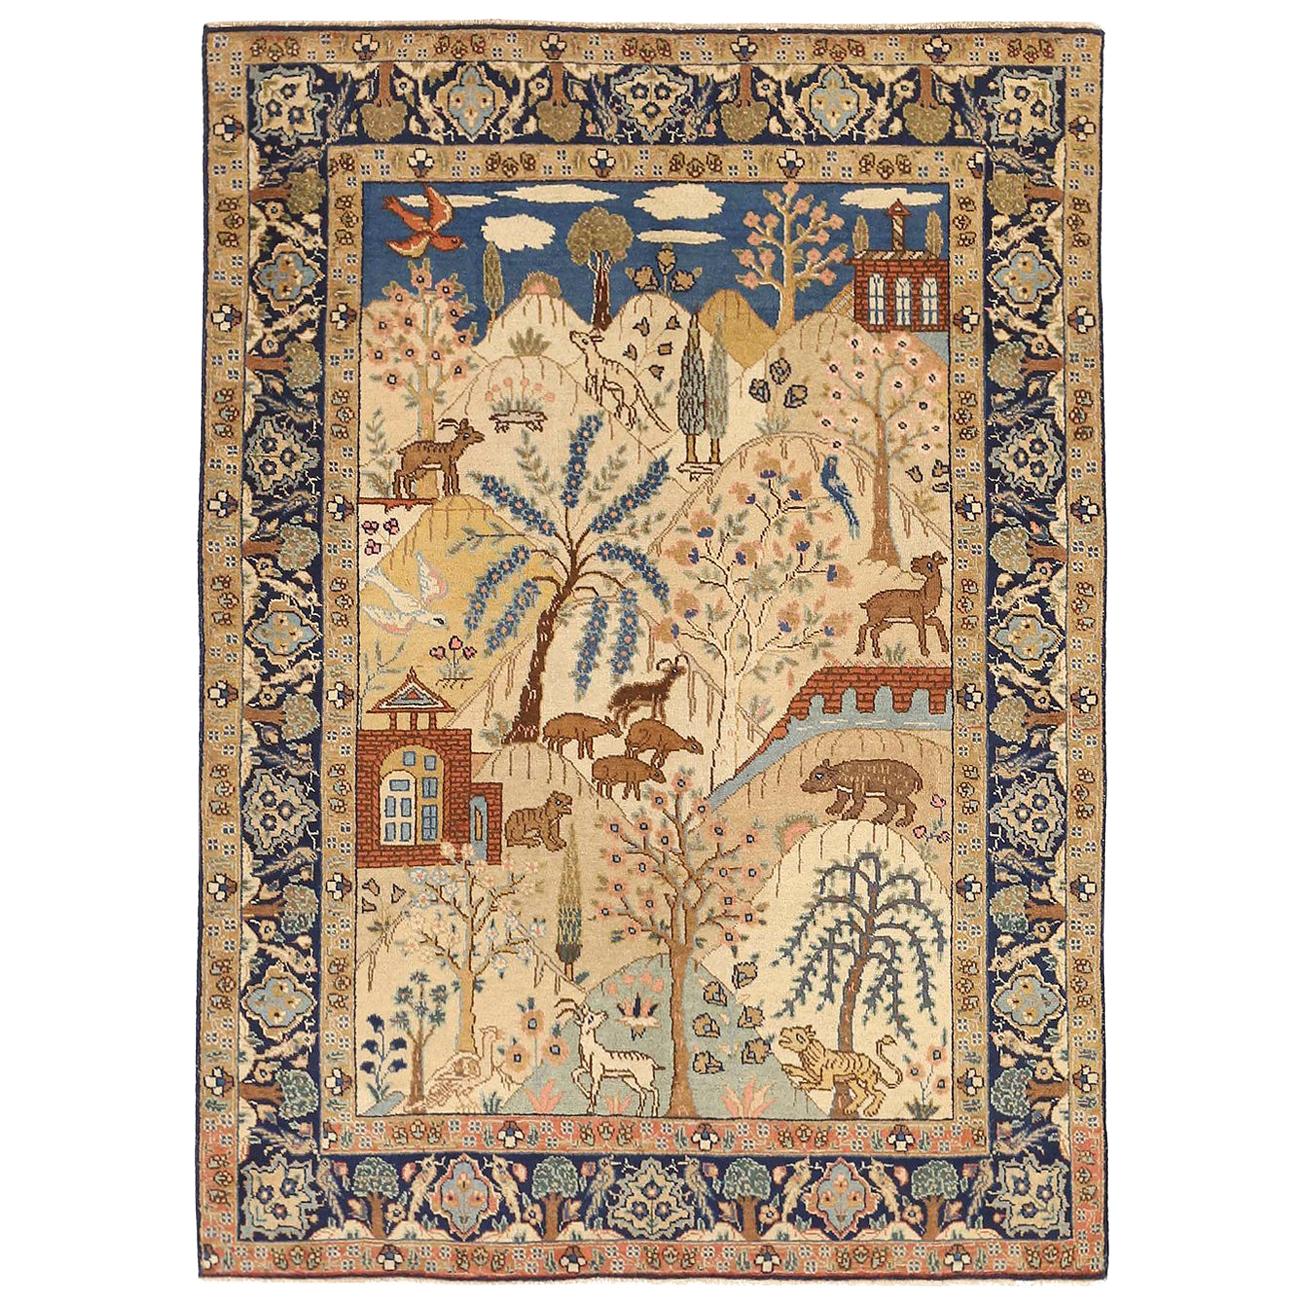 Antique Persian Tabriz Rug with Colorful Animals & Landscape Details For Sale